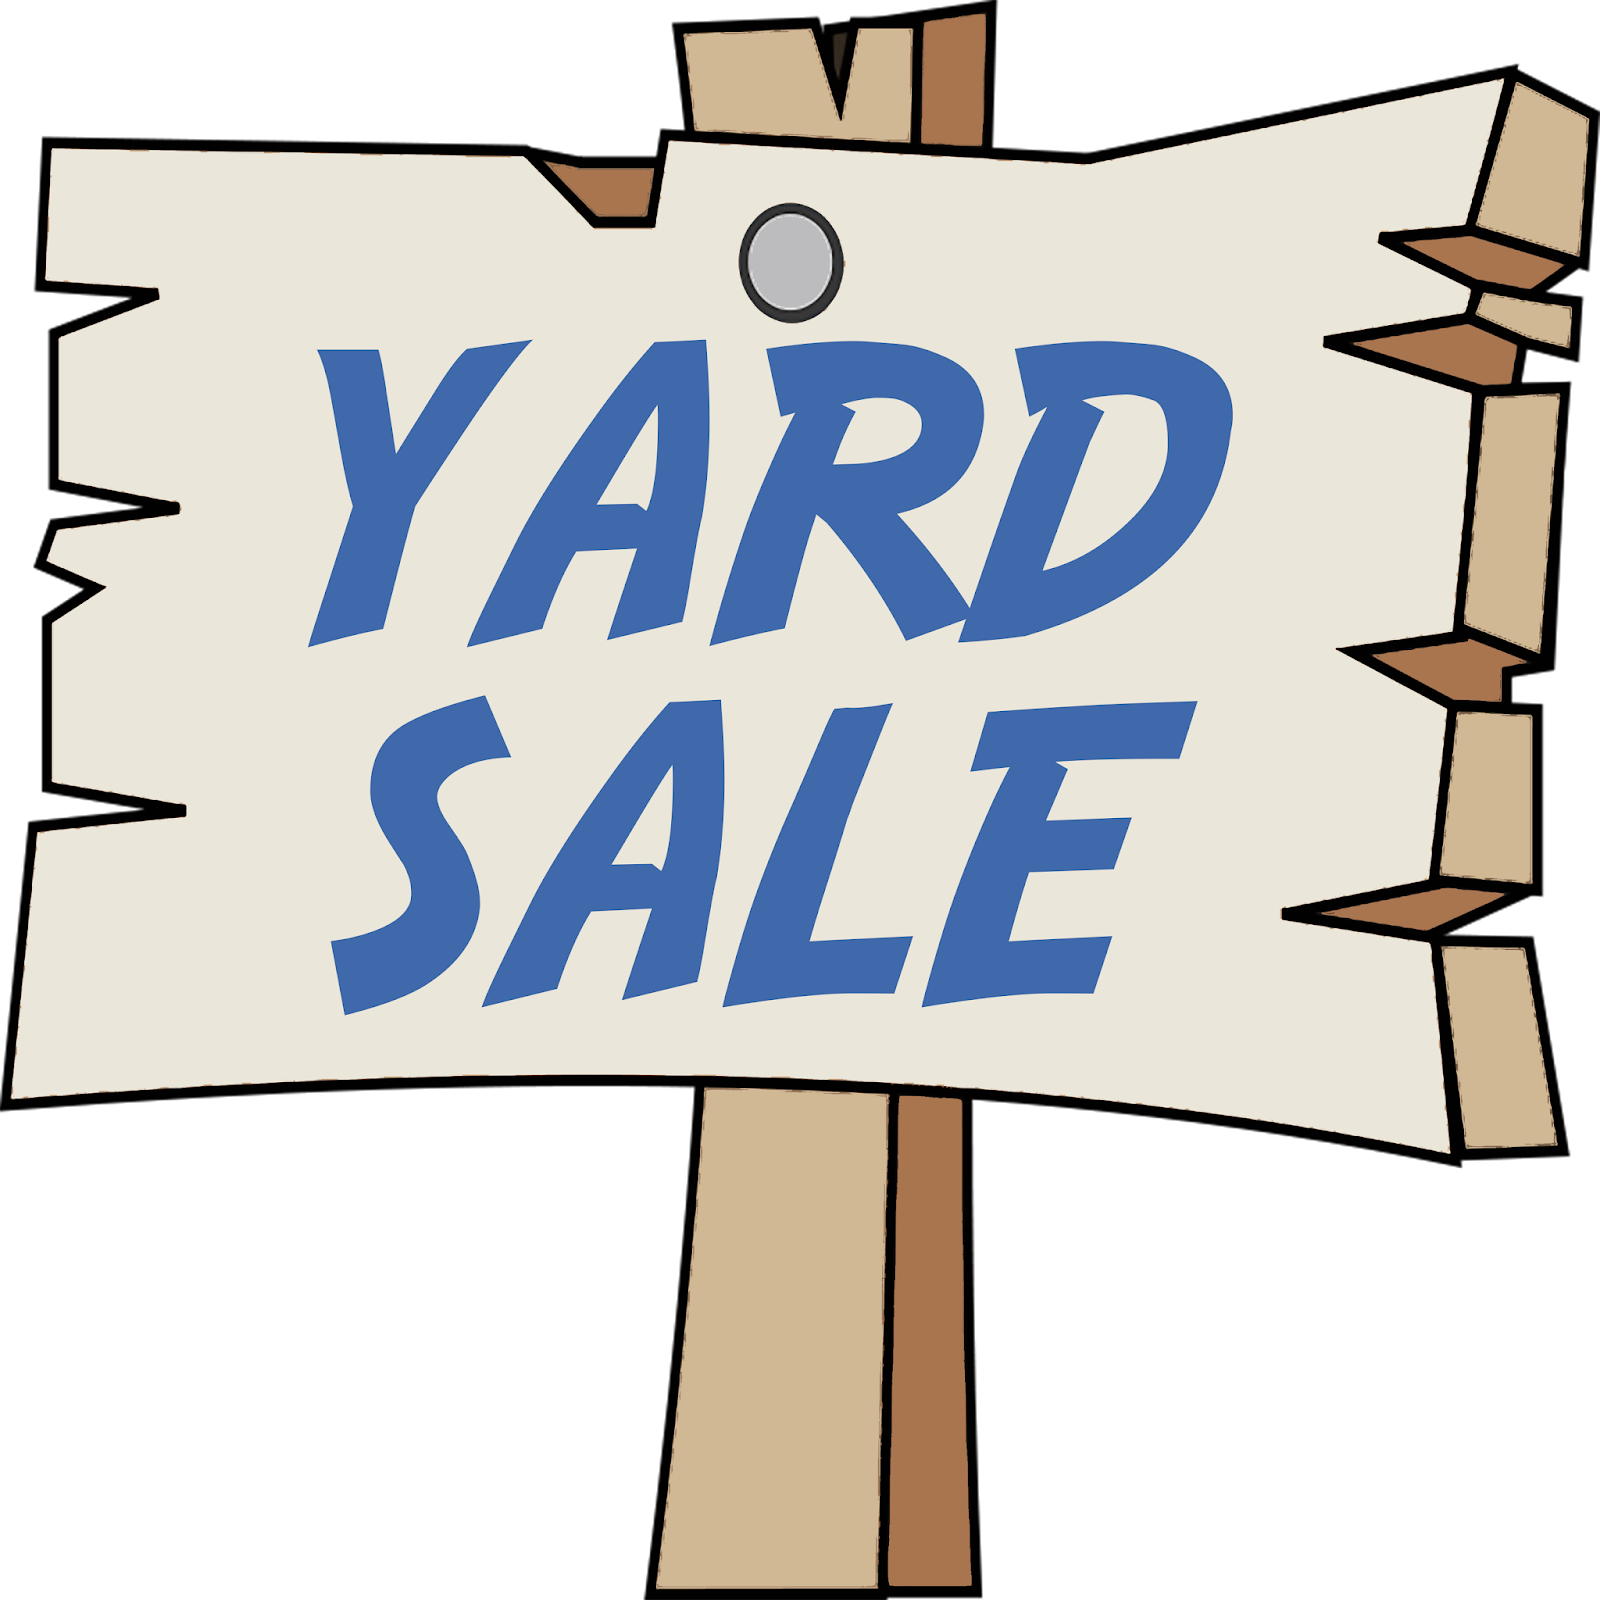 Free Printable Printable Yard Sale Signs